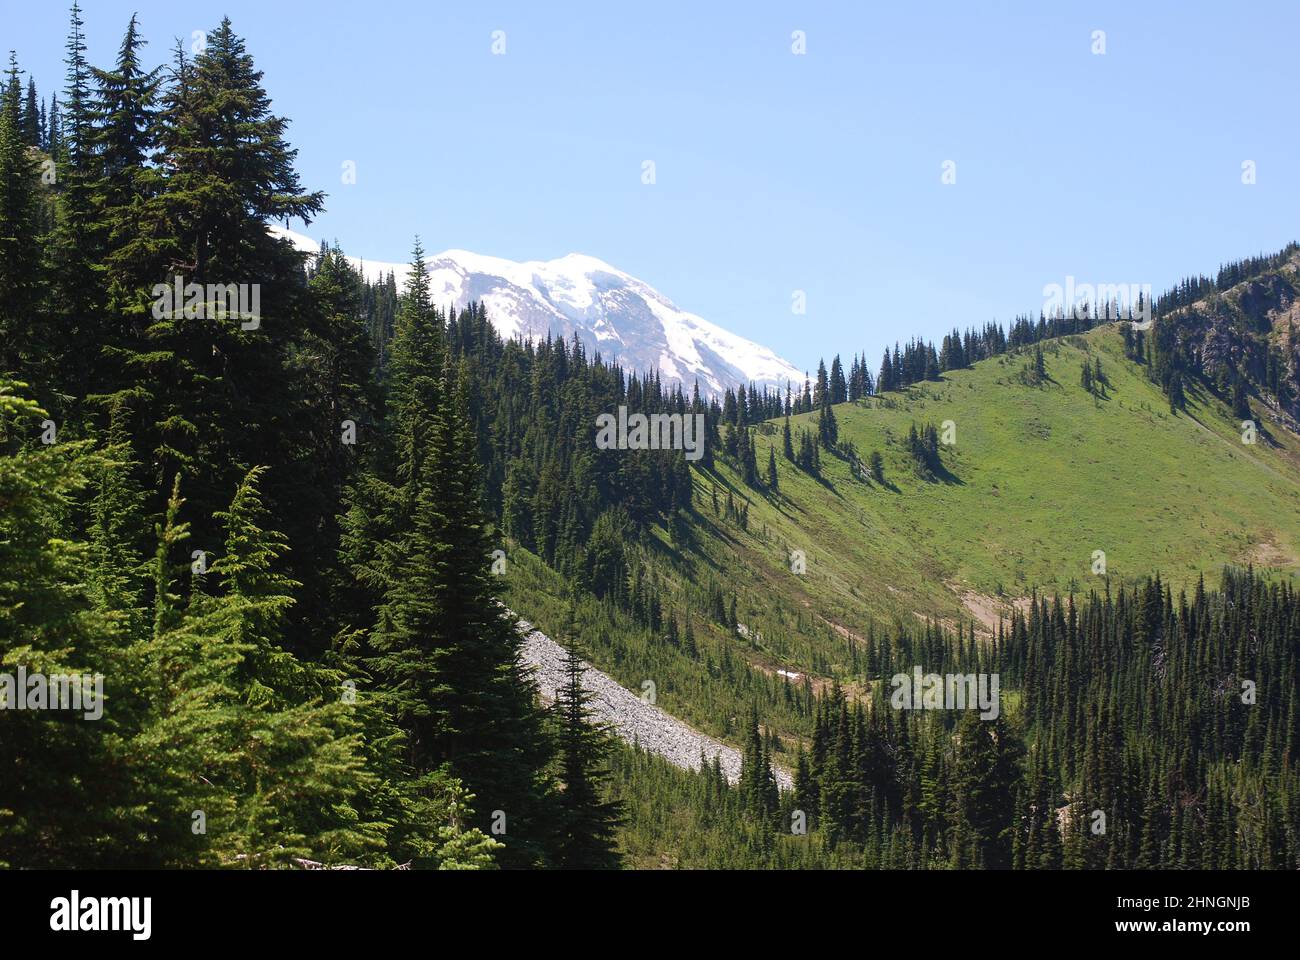 Mt. Rainier National Park view Stock Photo